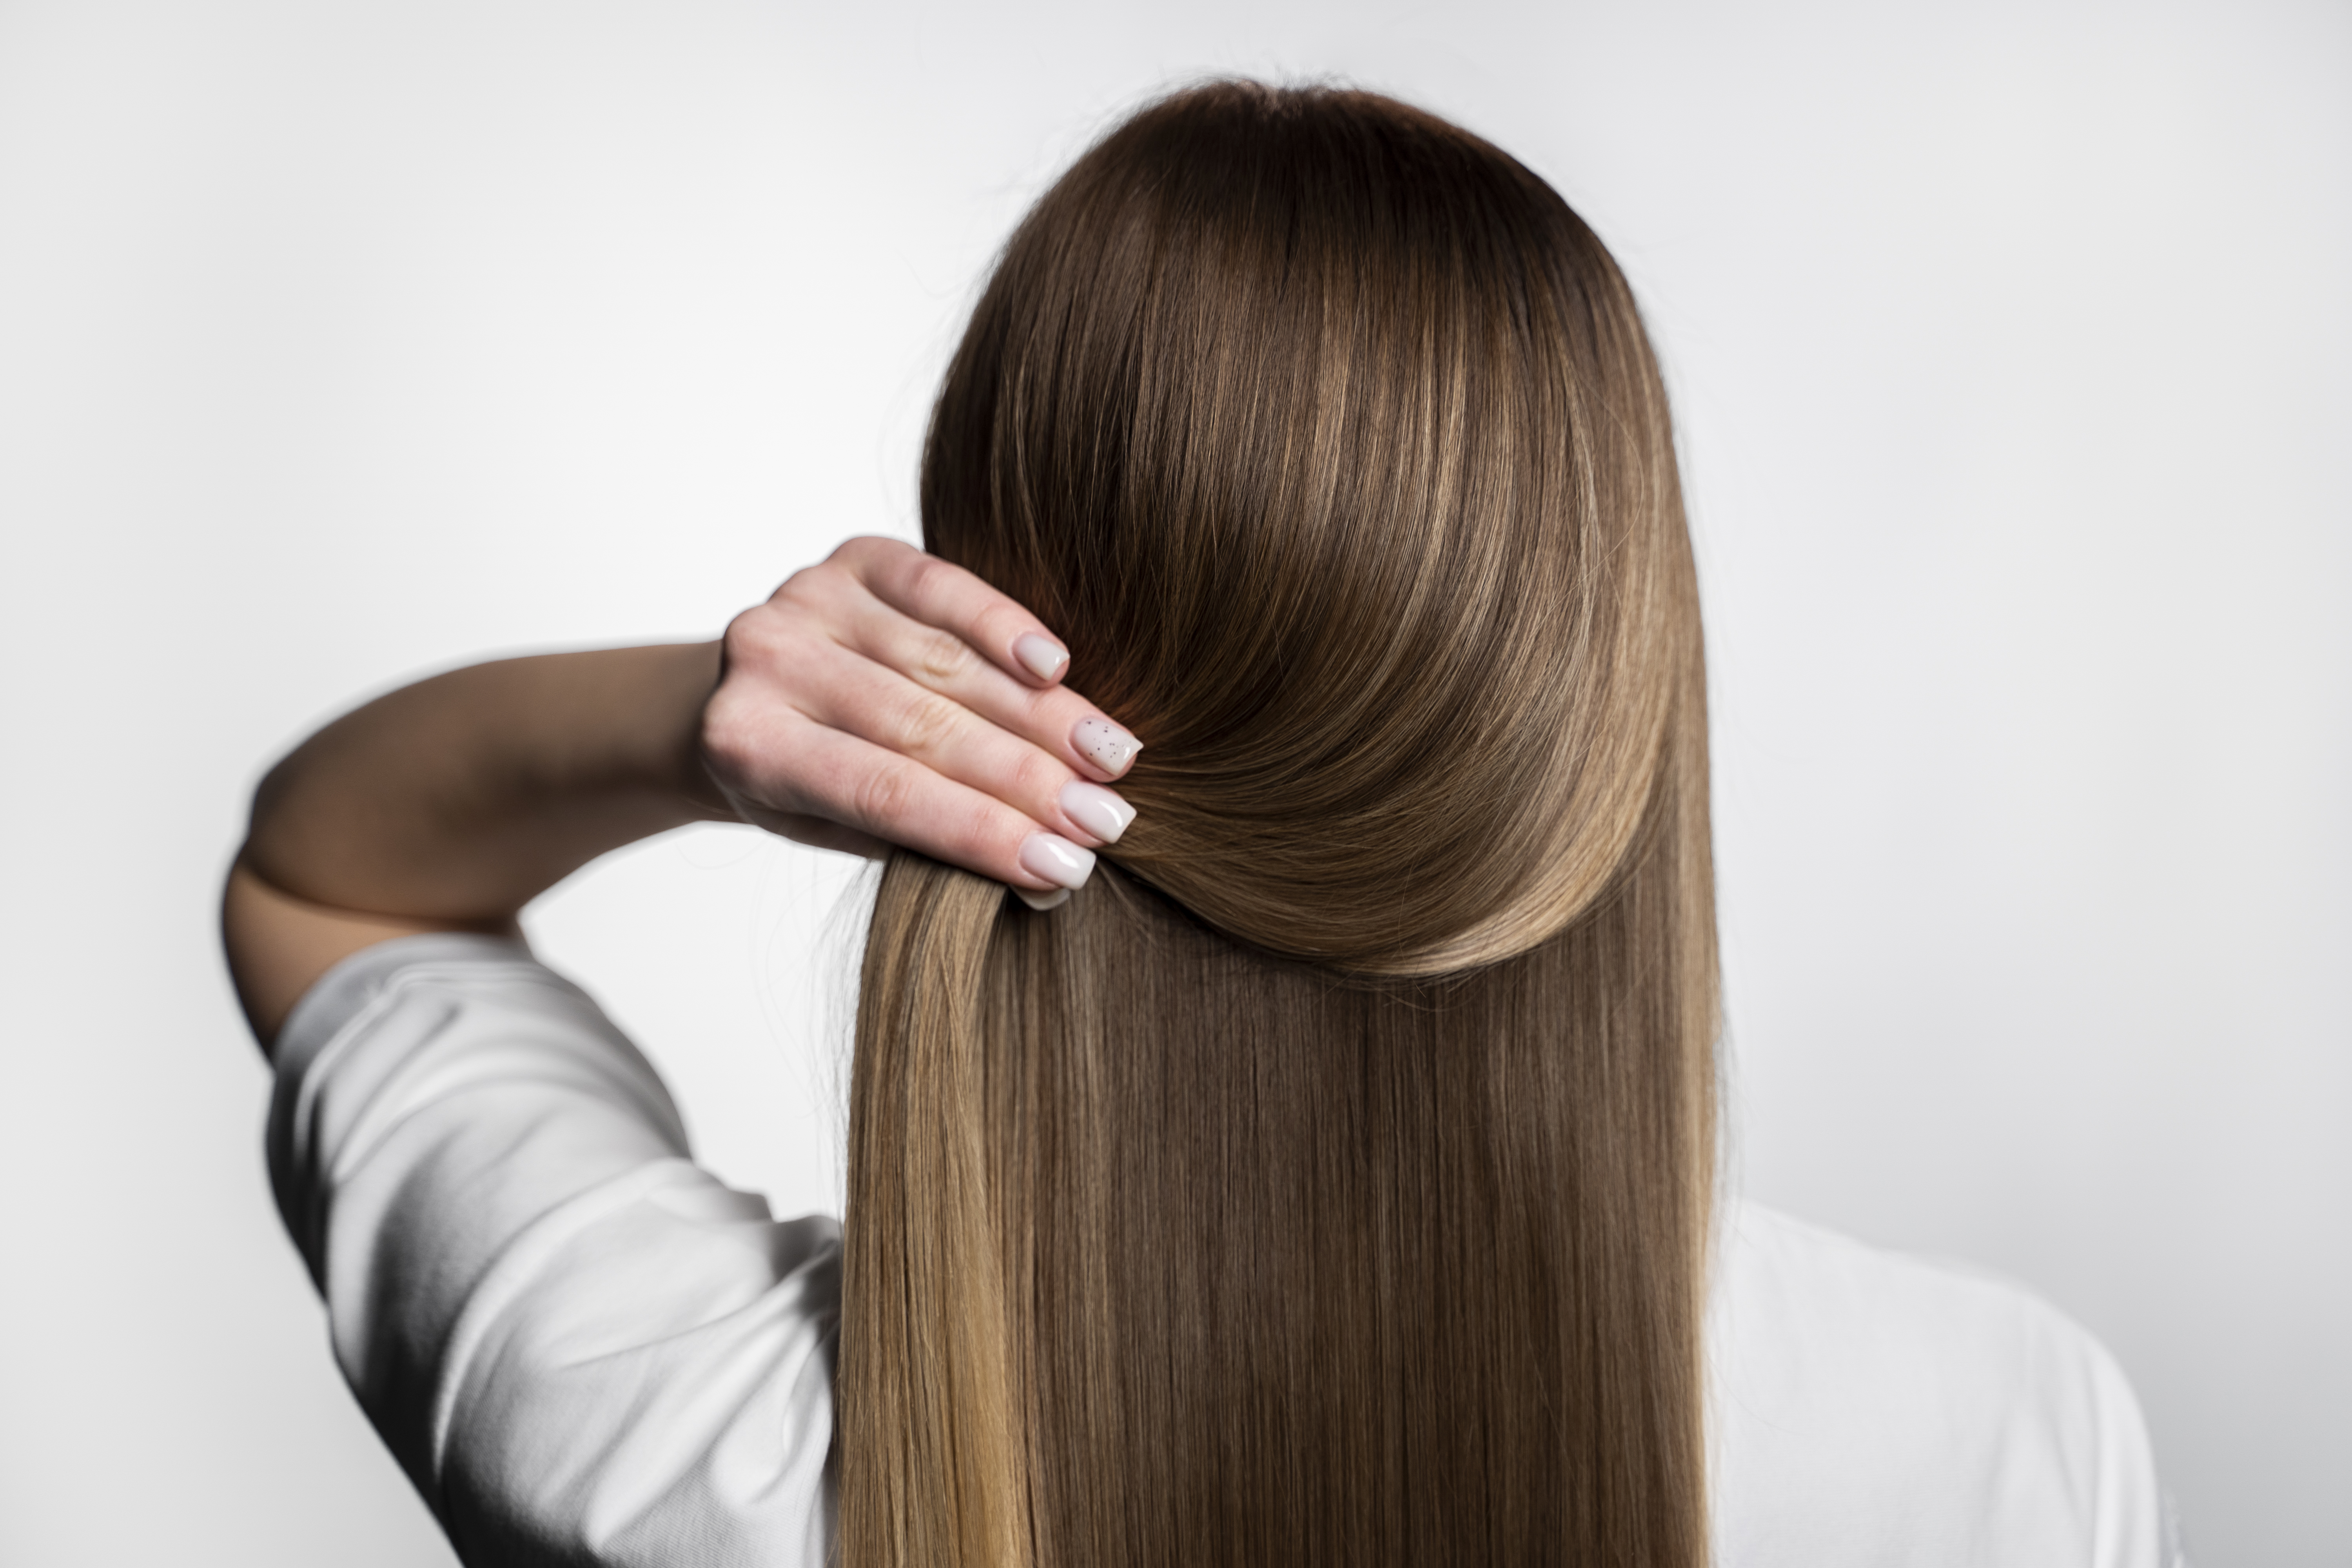 Does hair growth serum work?